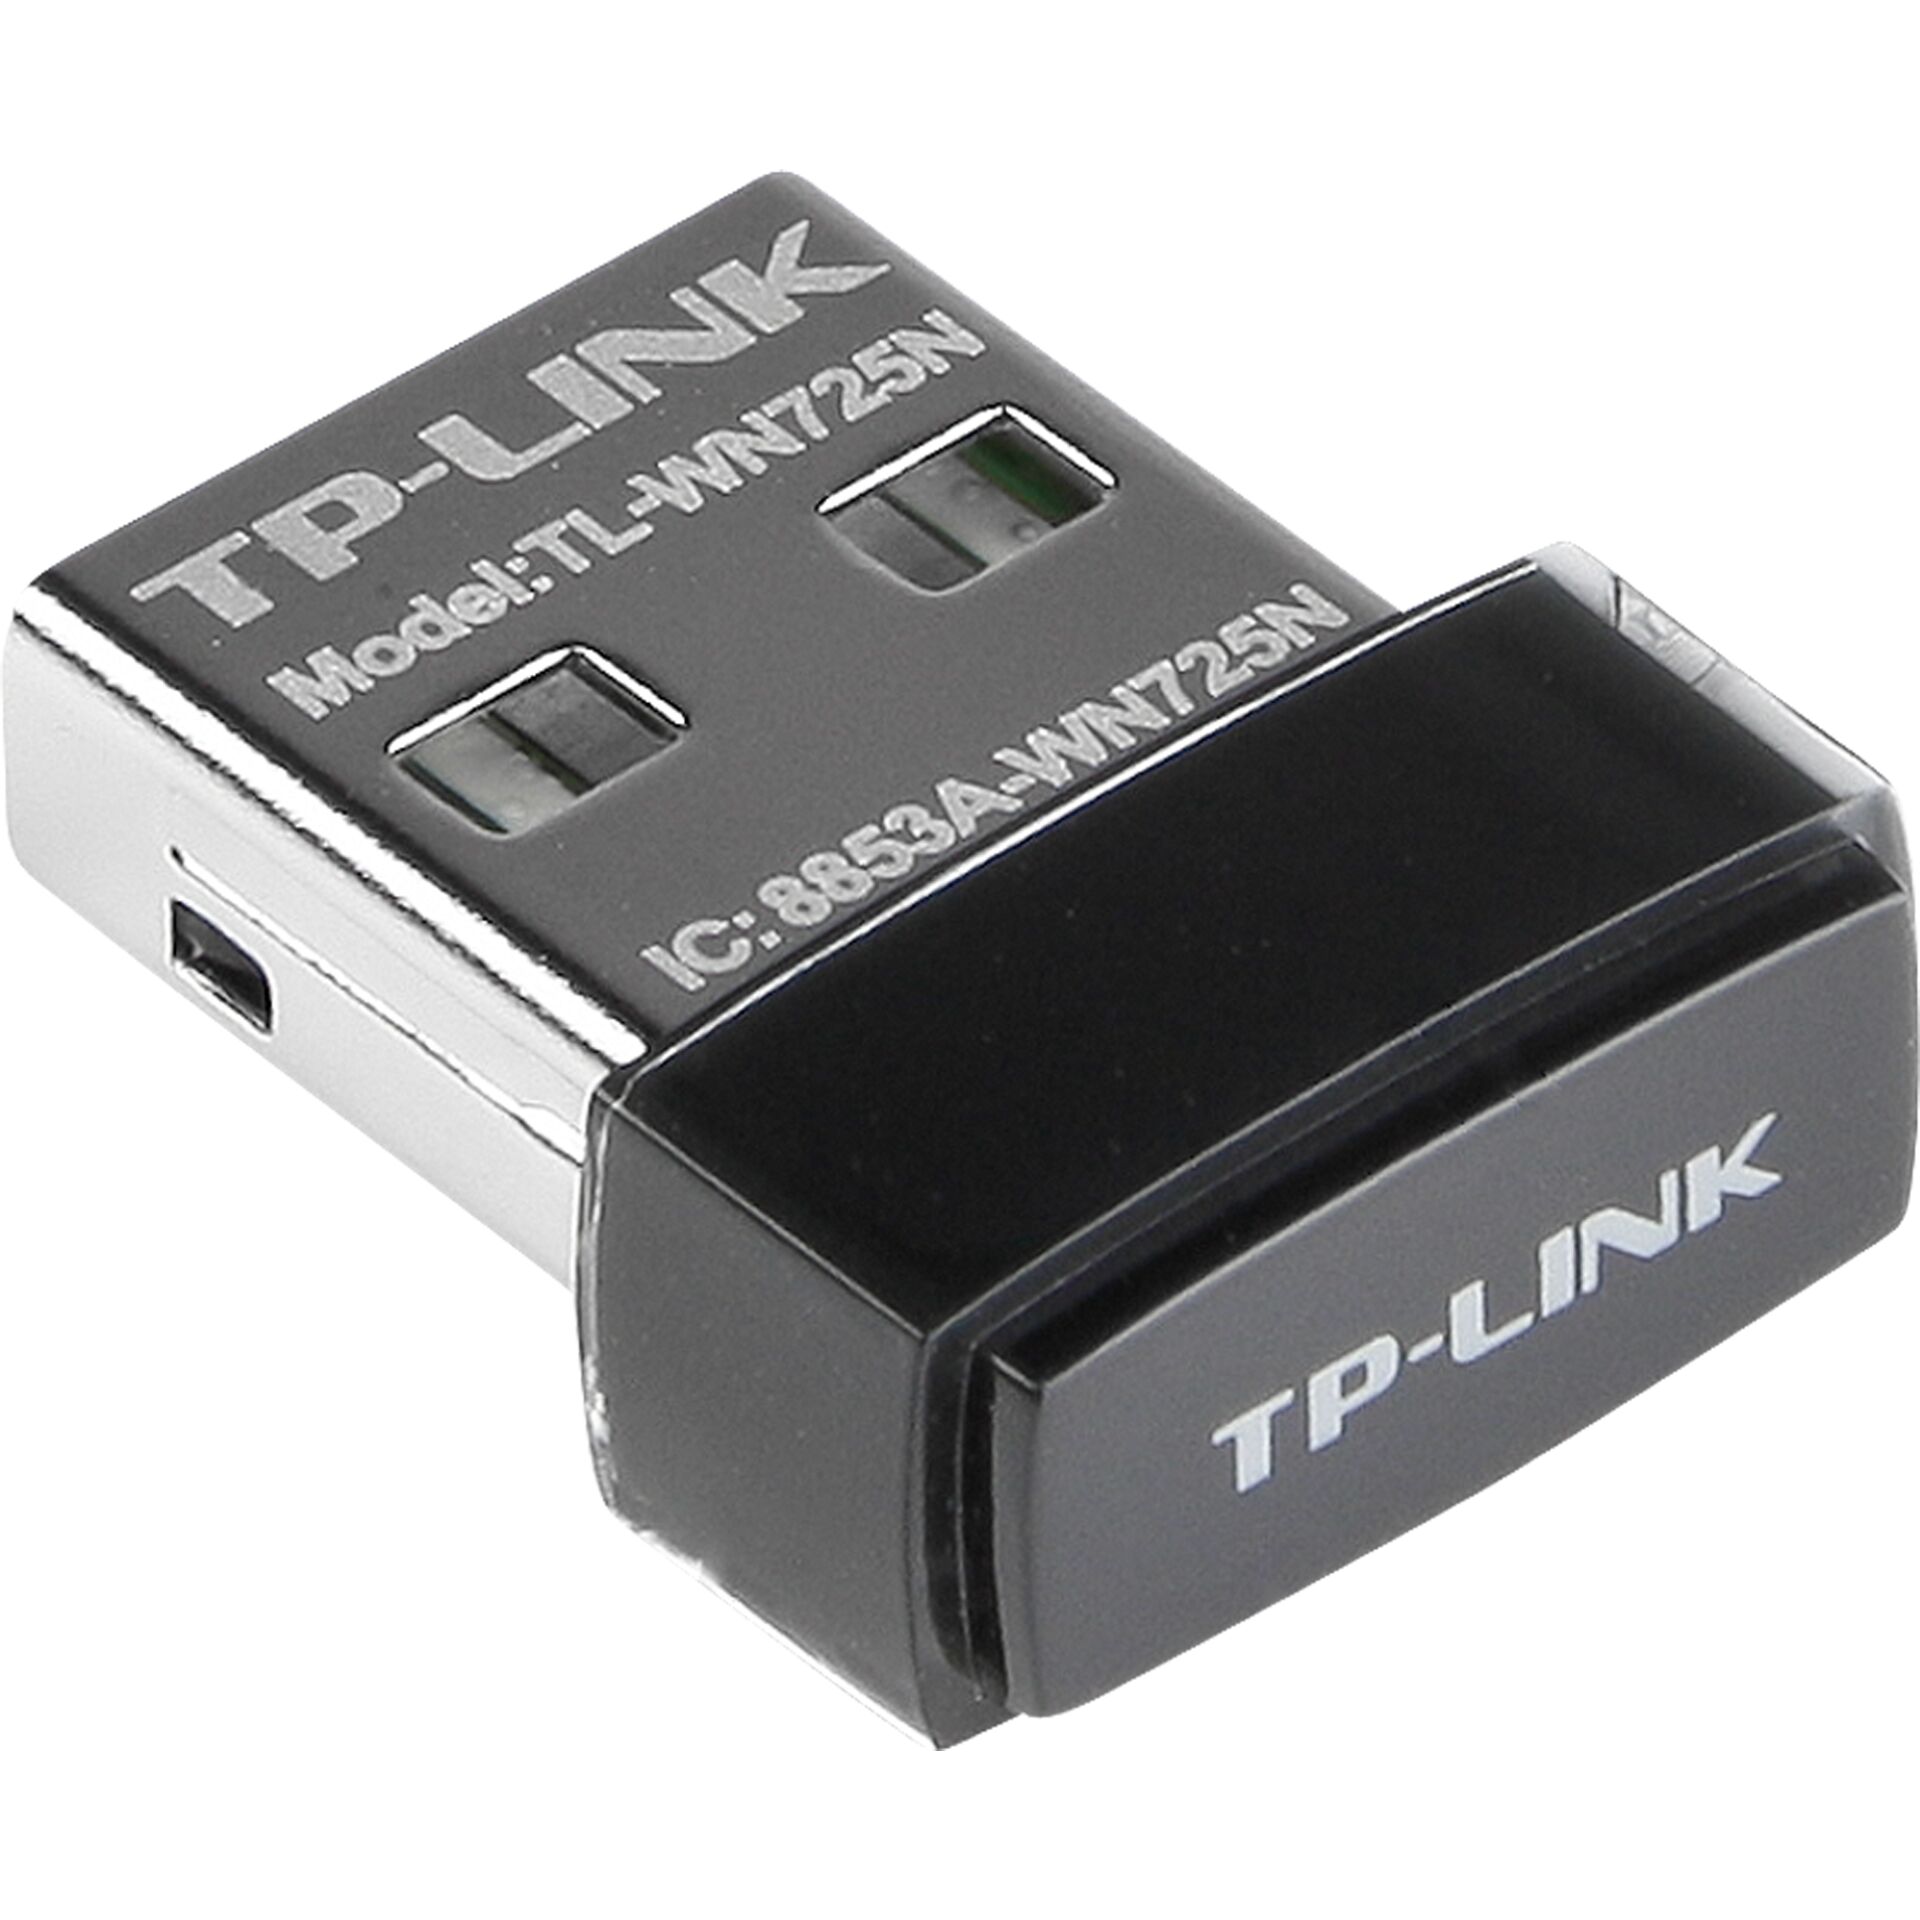 TP-Link TL-WN725N 150Mbps/ 2.4GHz Wireless-N-Nano-USB-Adapter